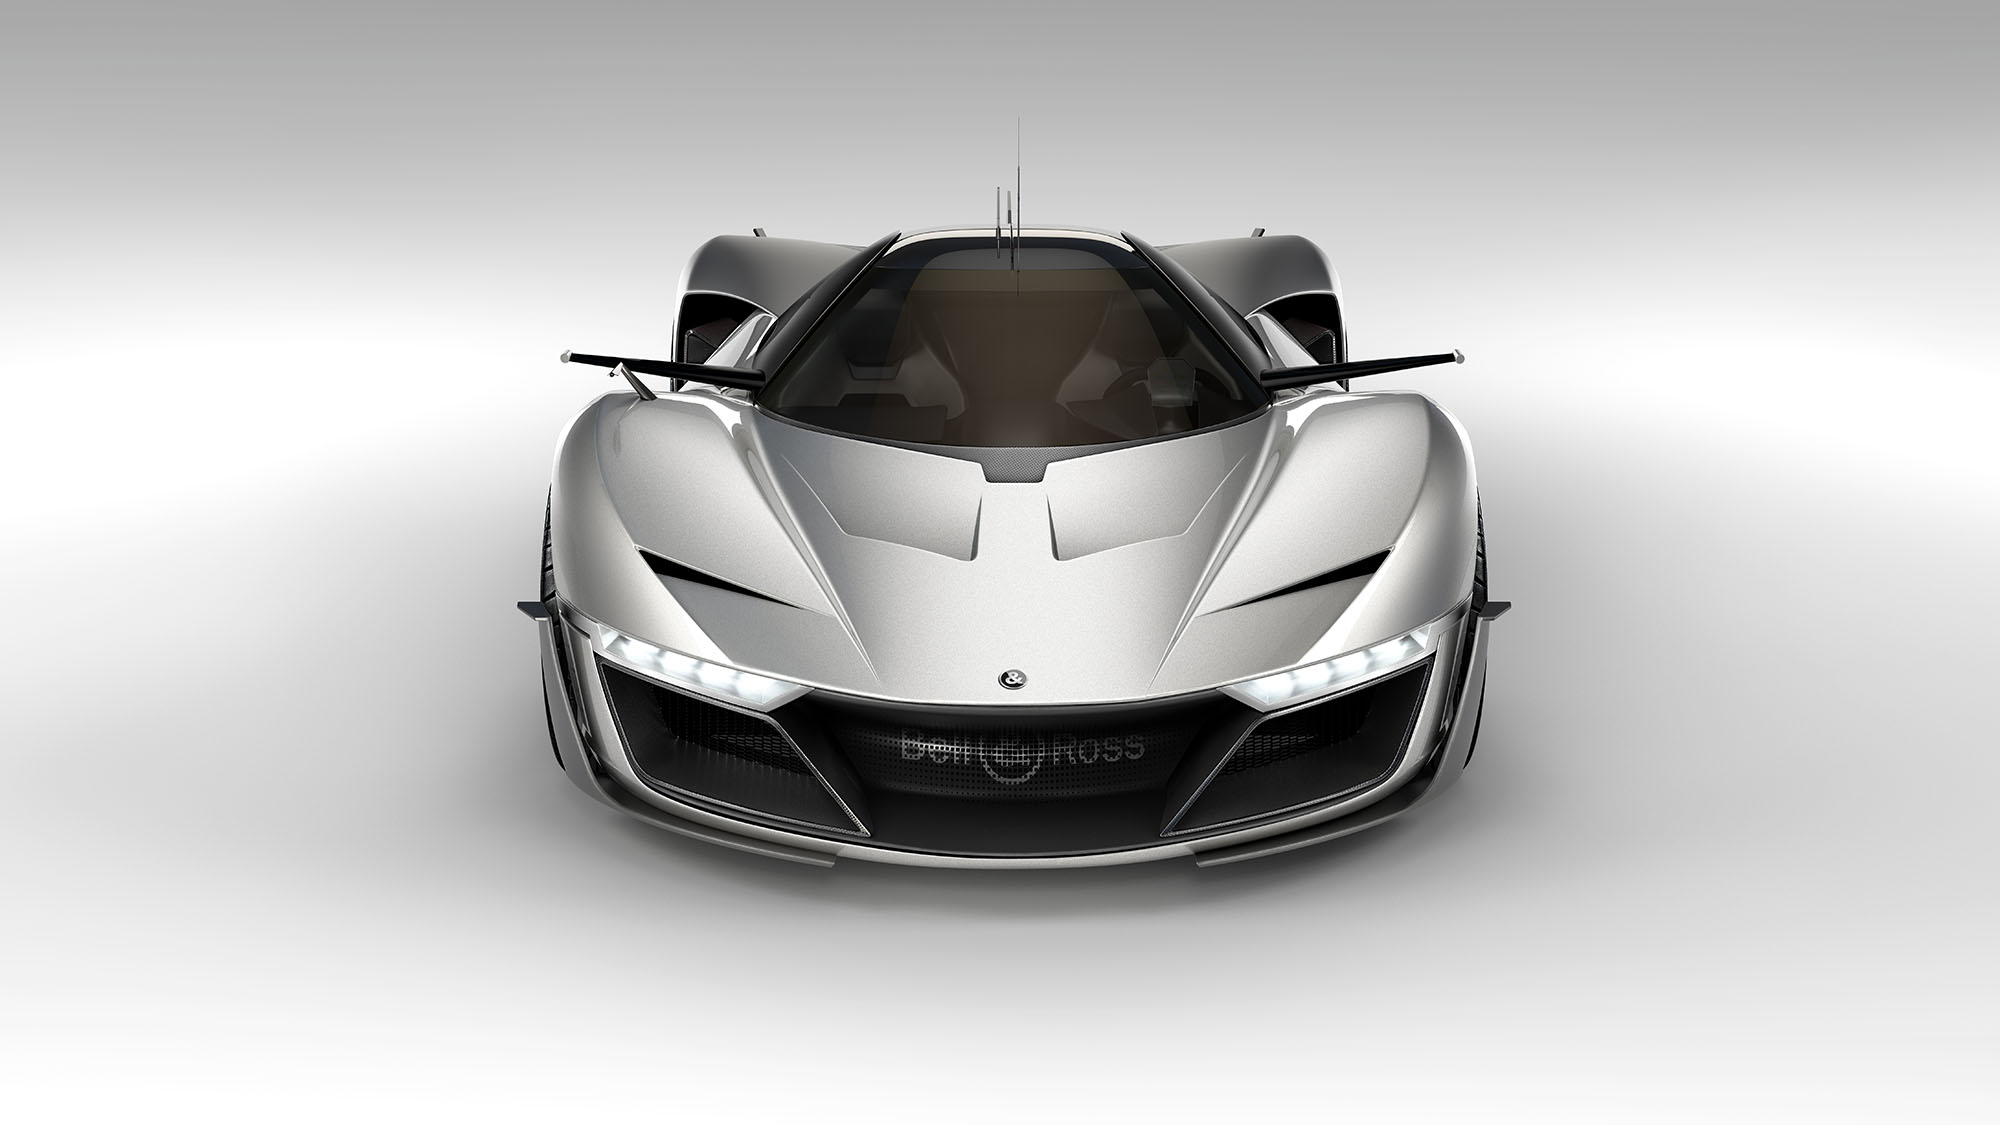 Bell & Ross Aero GT concept unveiled - photos | CarAdvice